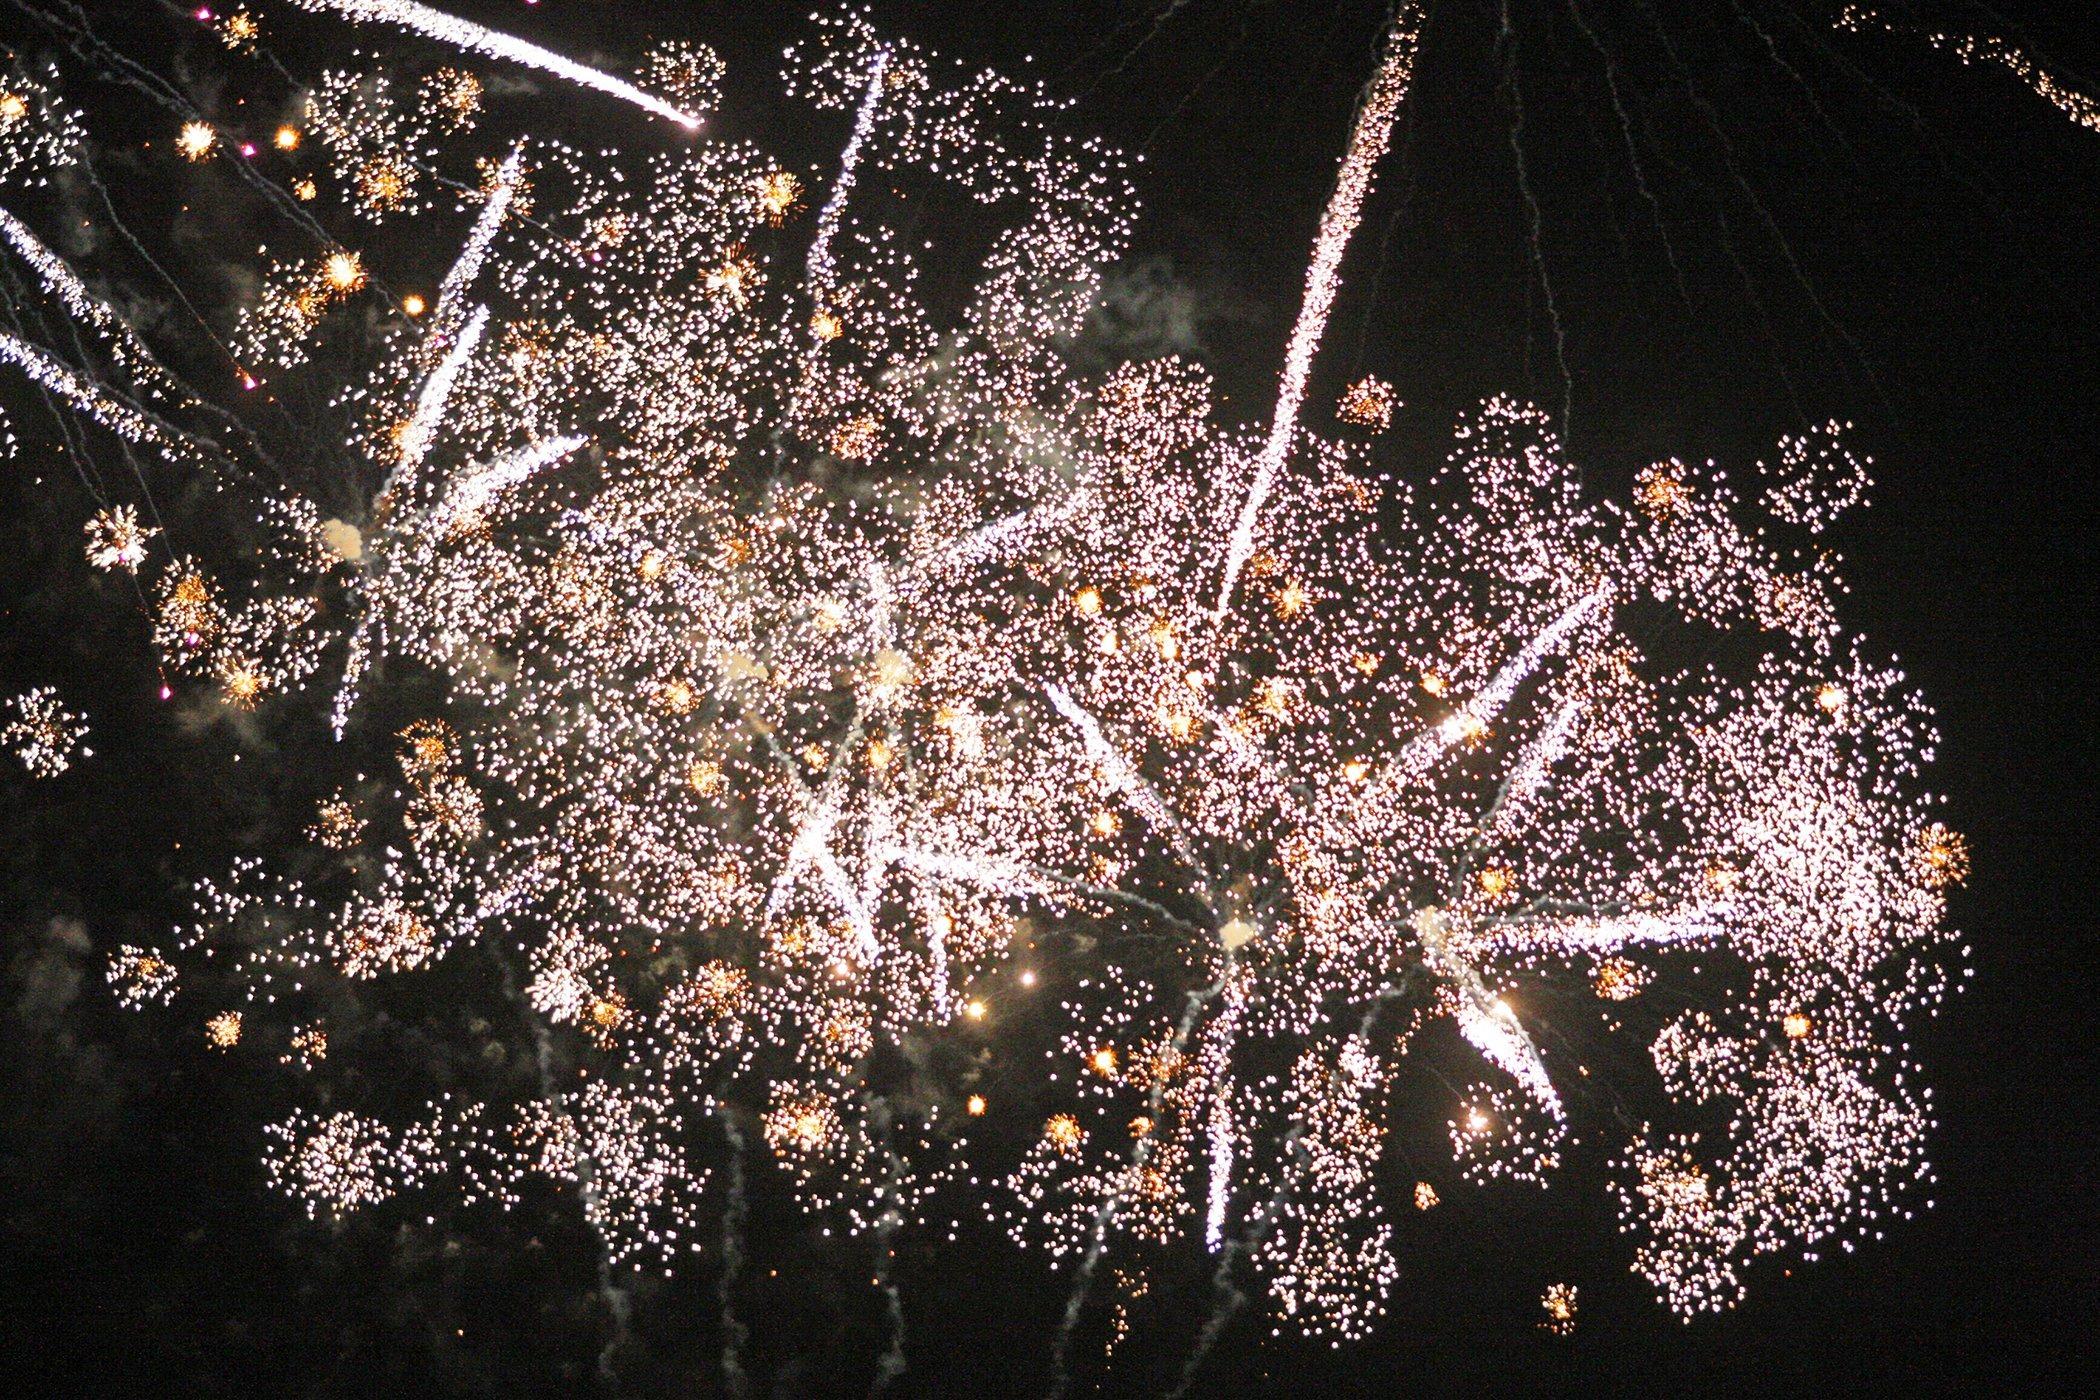 DM19110712a.jpg. Worthing fireworks night. Photo by Derek Martin Photography.